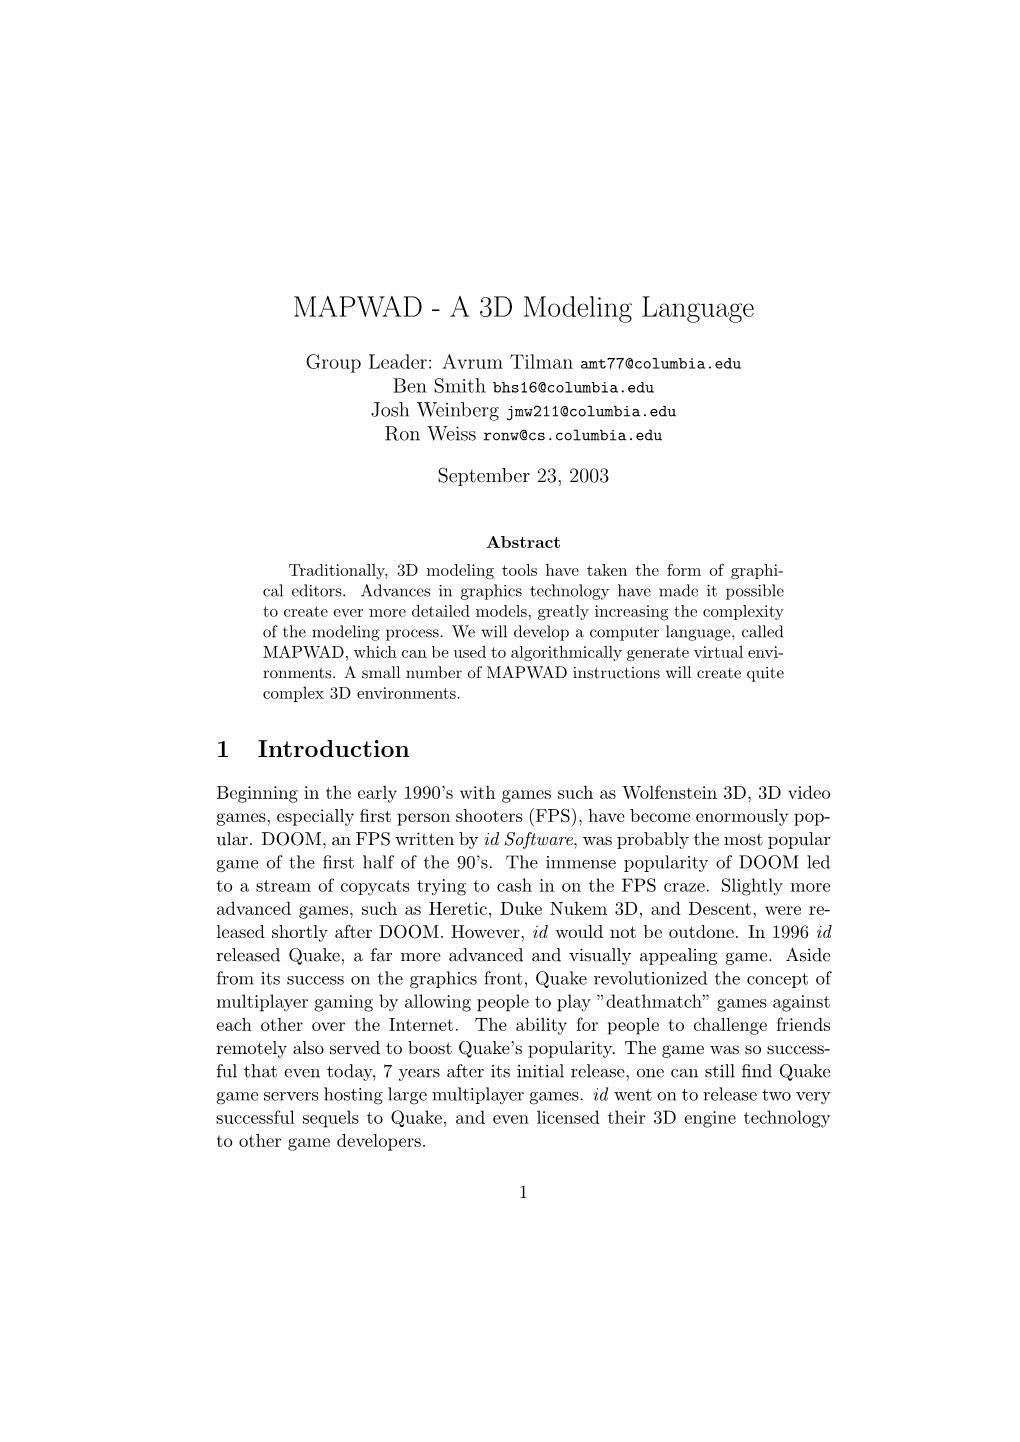 MAPWAD - a 3D Modeling Language